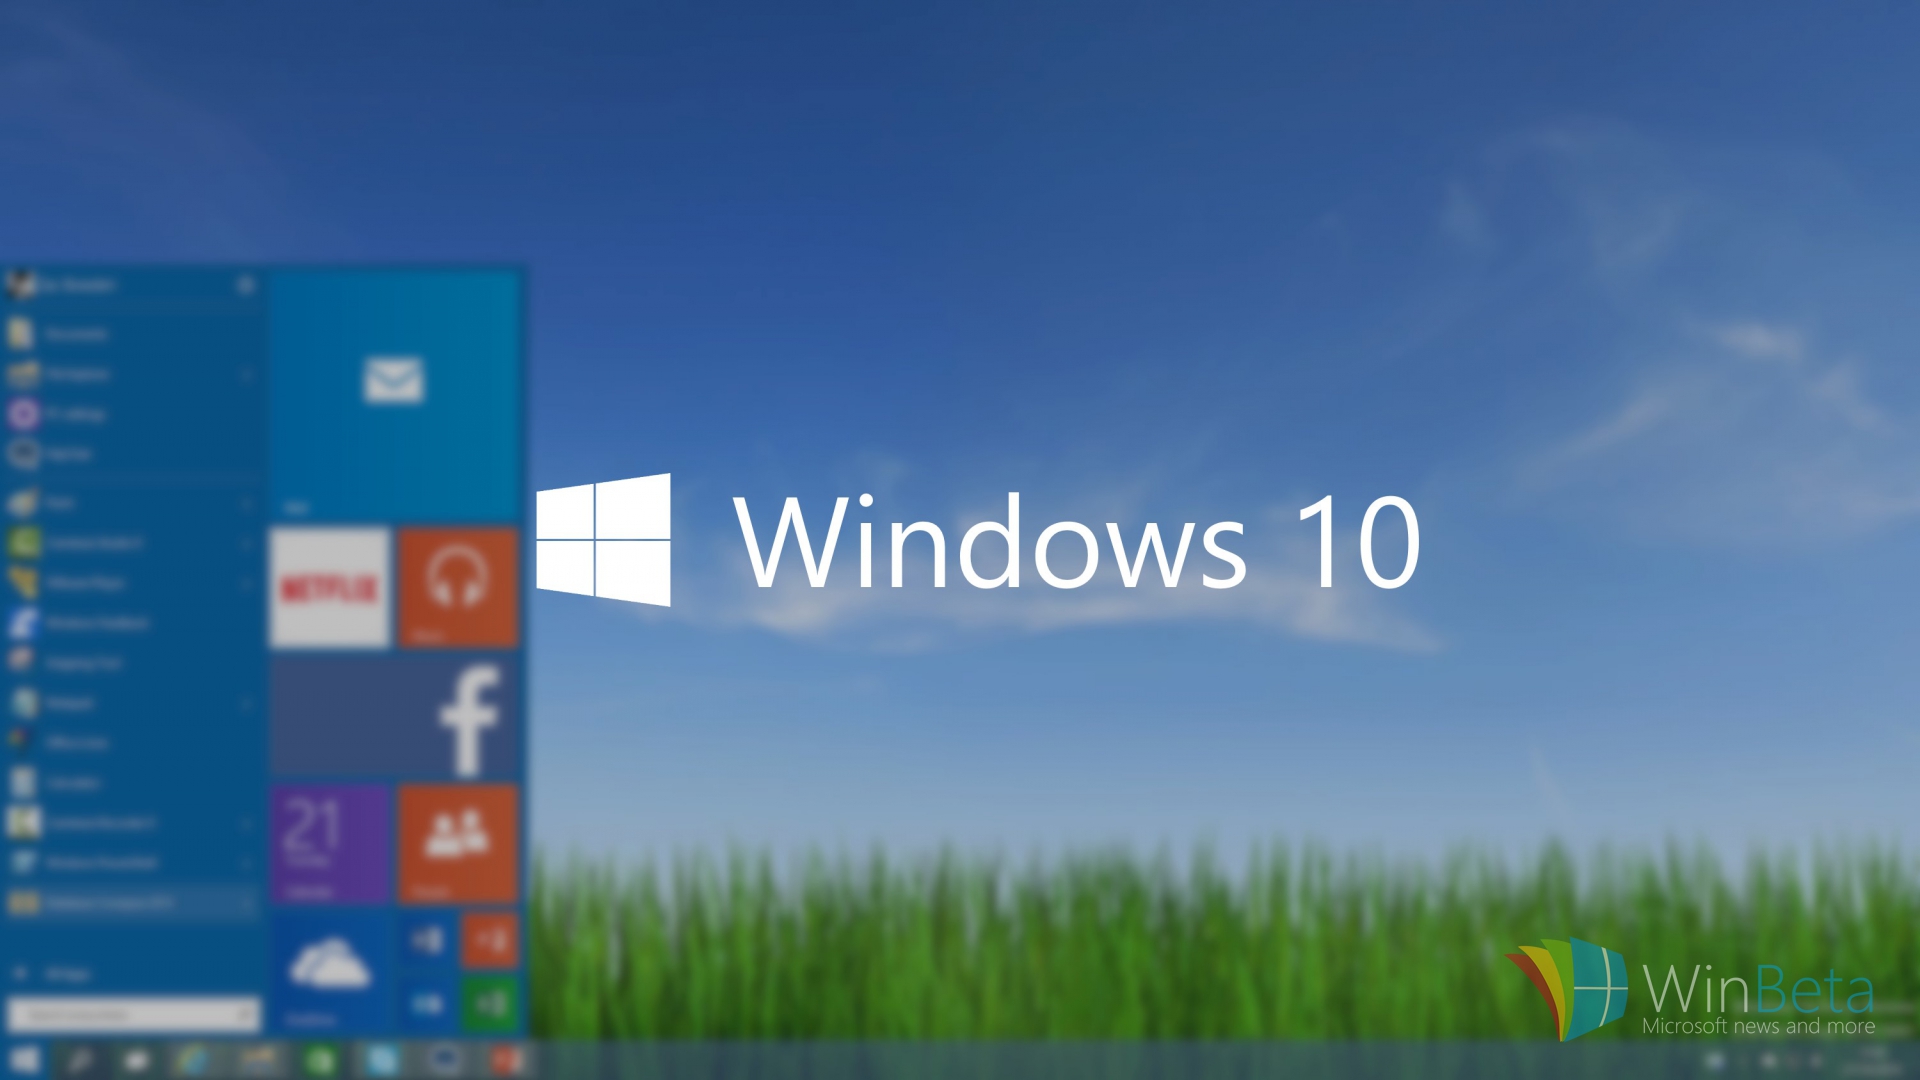 Azerbaijani users obtain Windows 10 for free